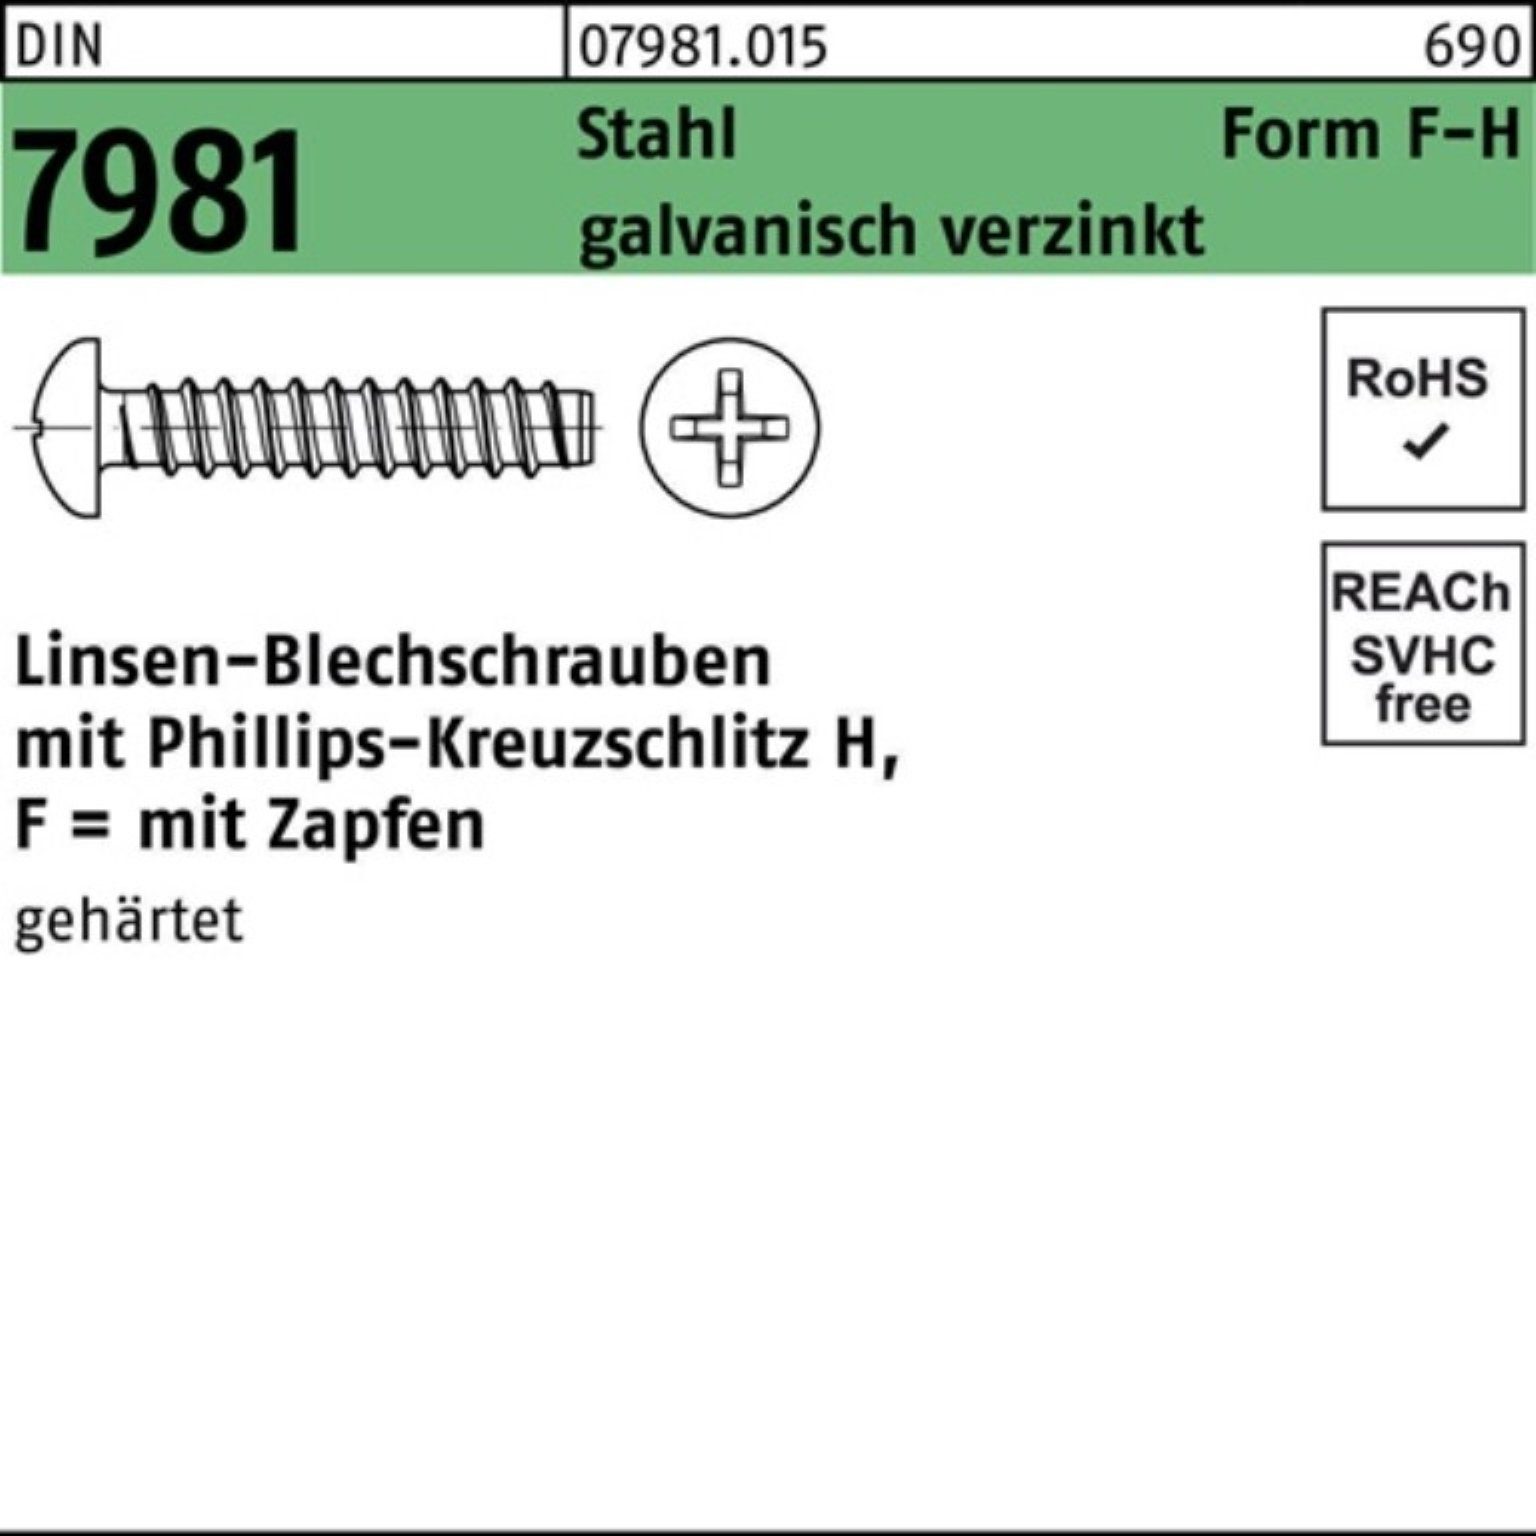 LIKO Blechschraube 7981 Blechschraube Stahl DIN galv.verz. 1000er Pack F PH Reyher 4,2x22-H